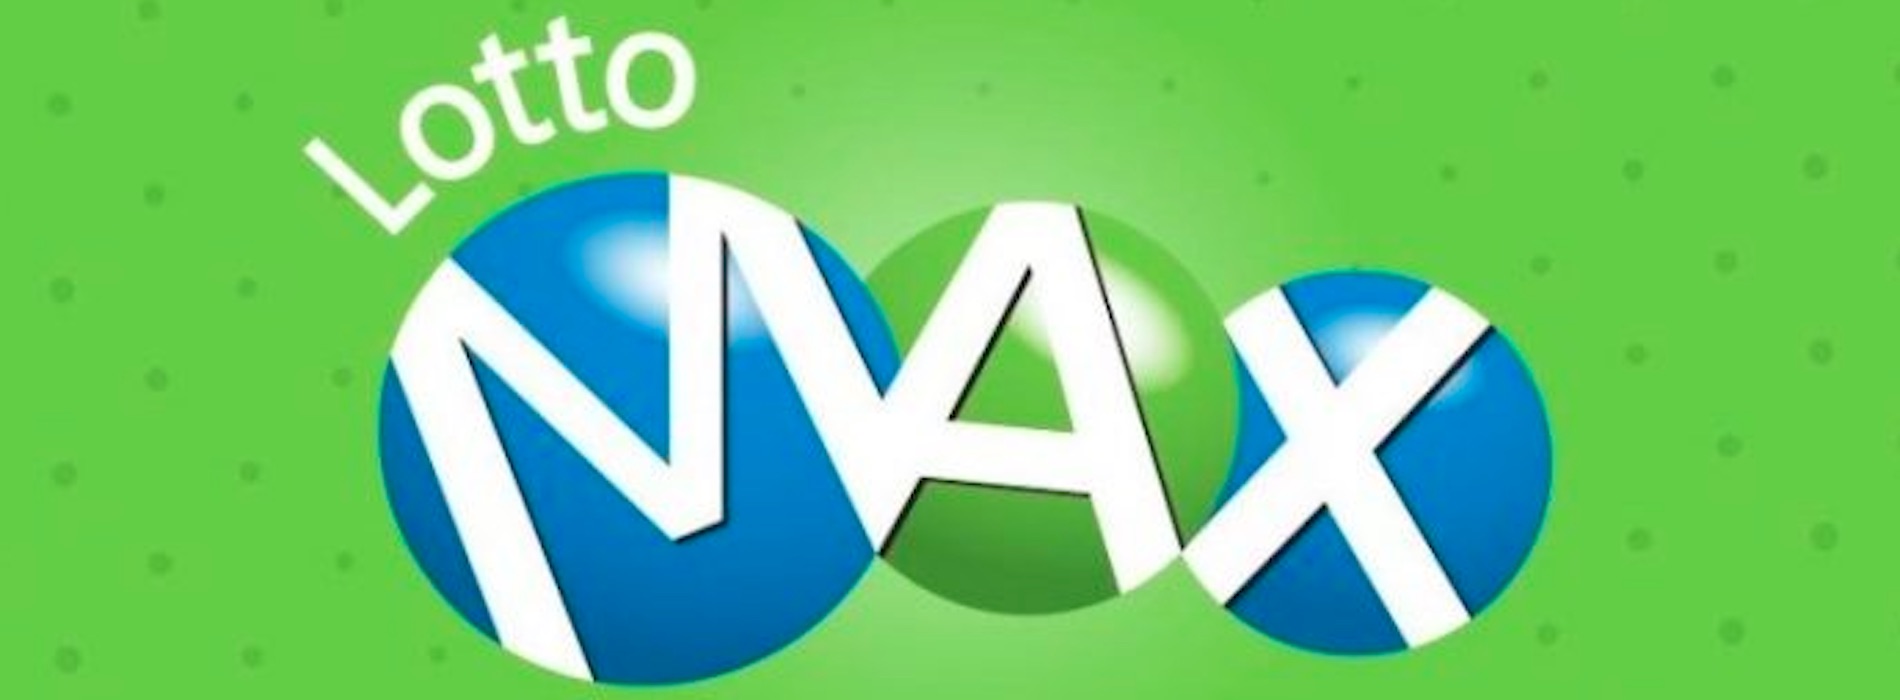 Ontario Resident Wins 60 Million in Lotto Max Draw Stoptheinstitute